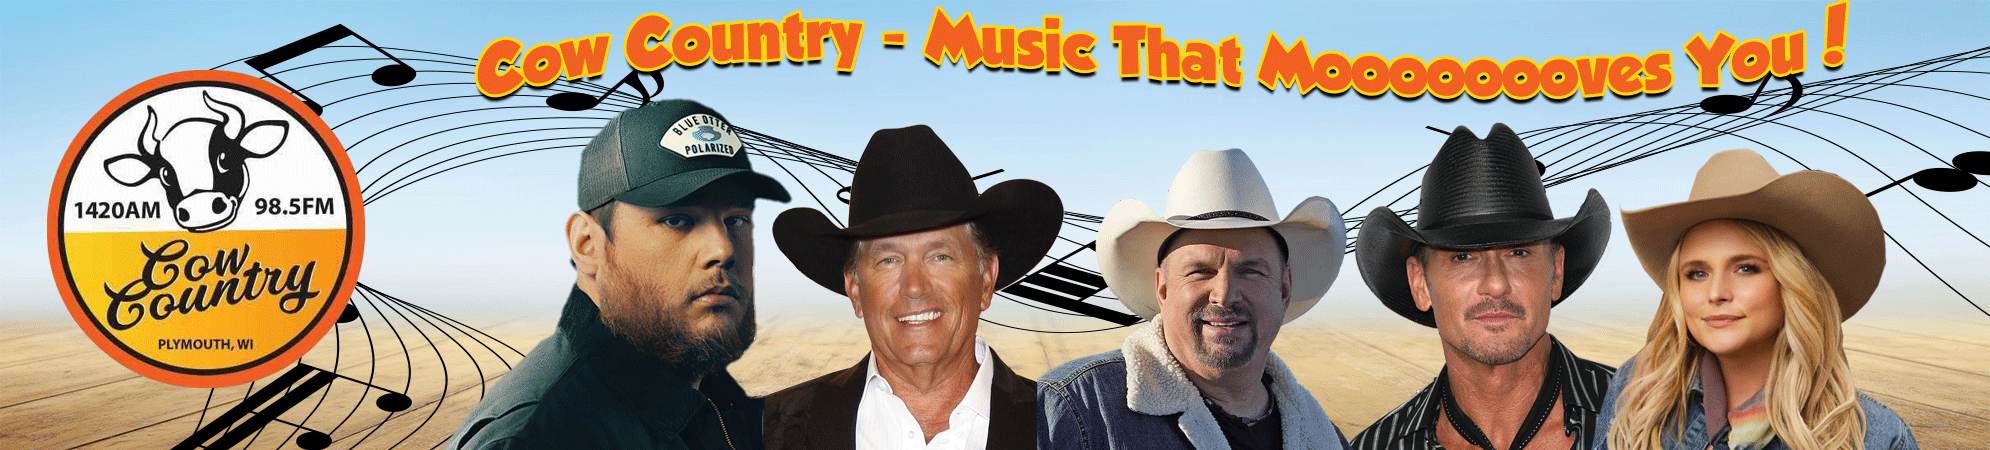 Cow Country – Music that Moooooooooves You!